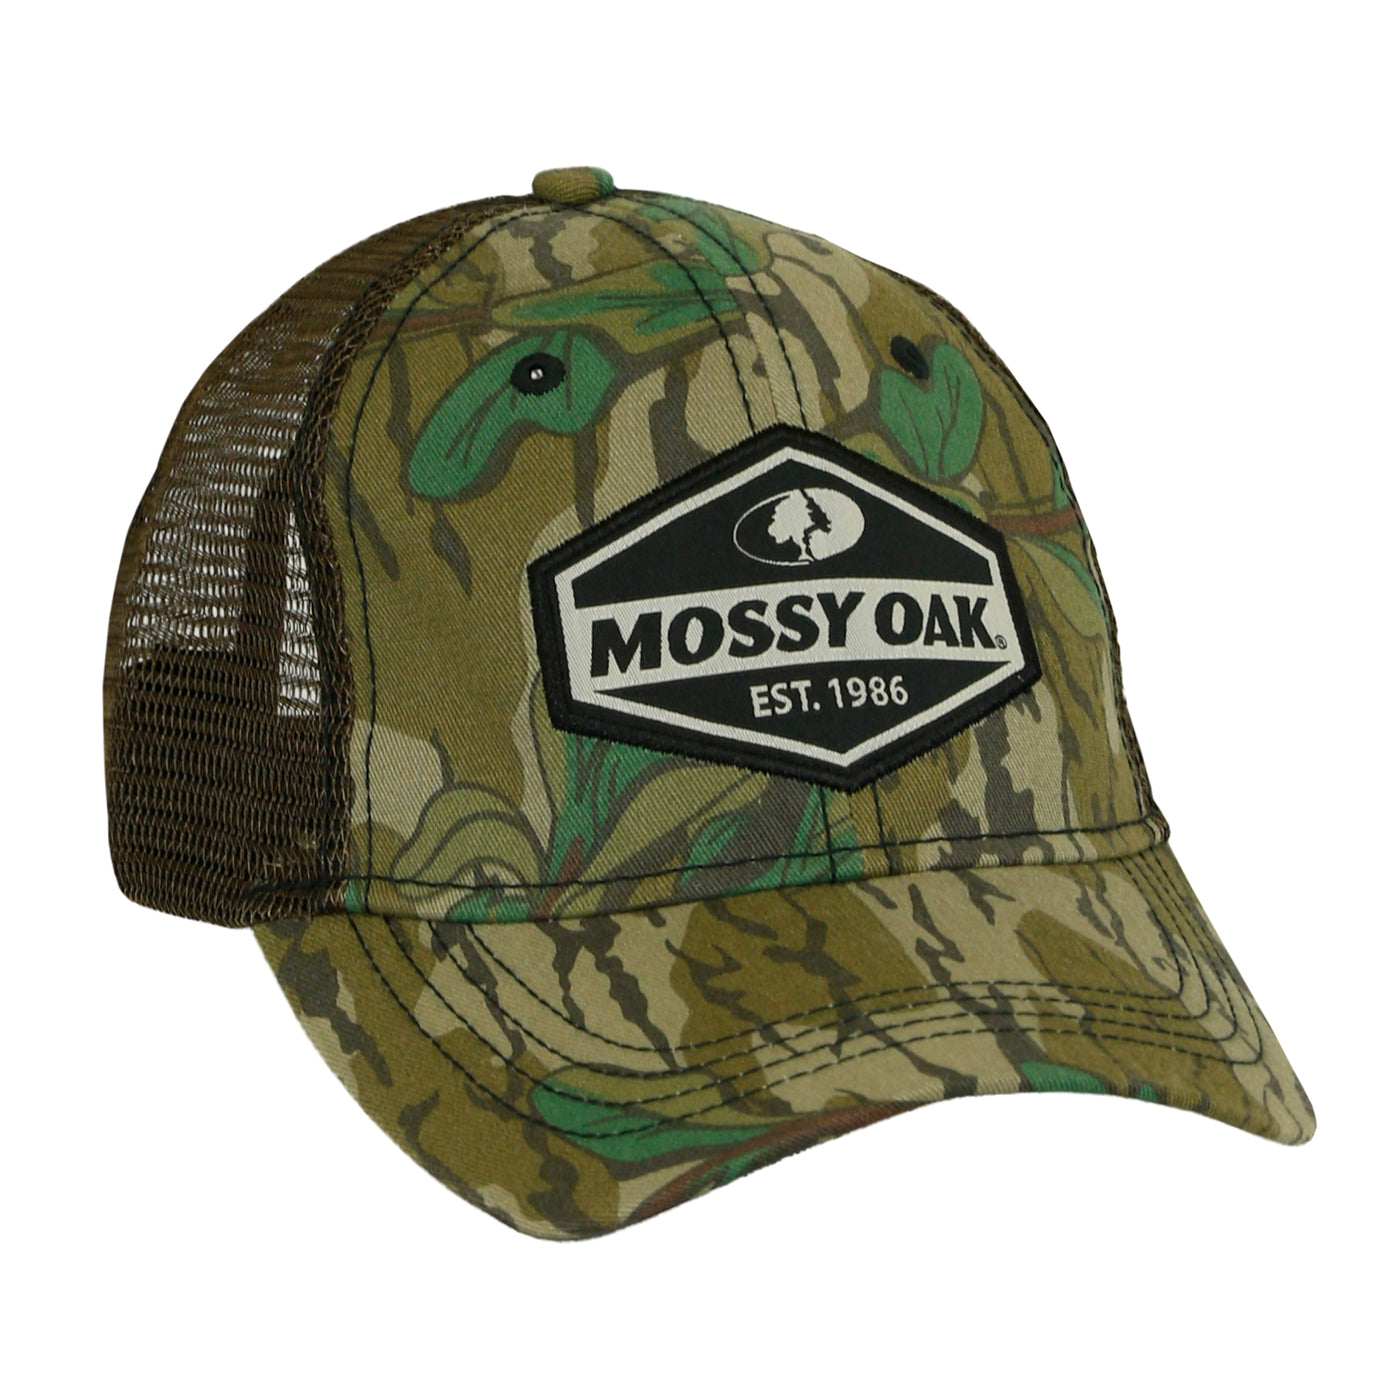 Mossy Oak Diamond Patch Mesh Back Cap